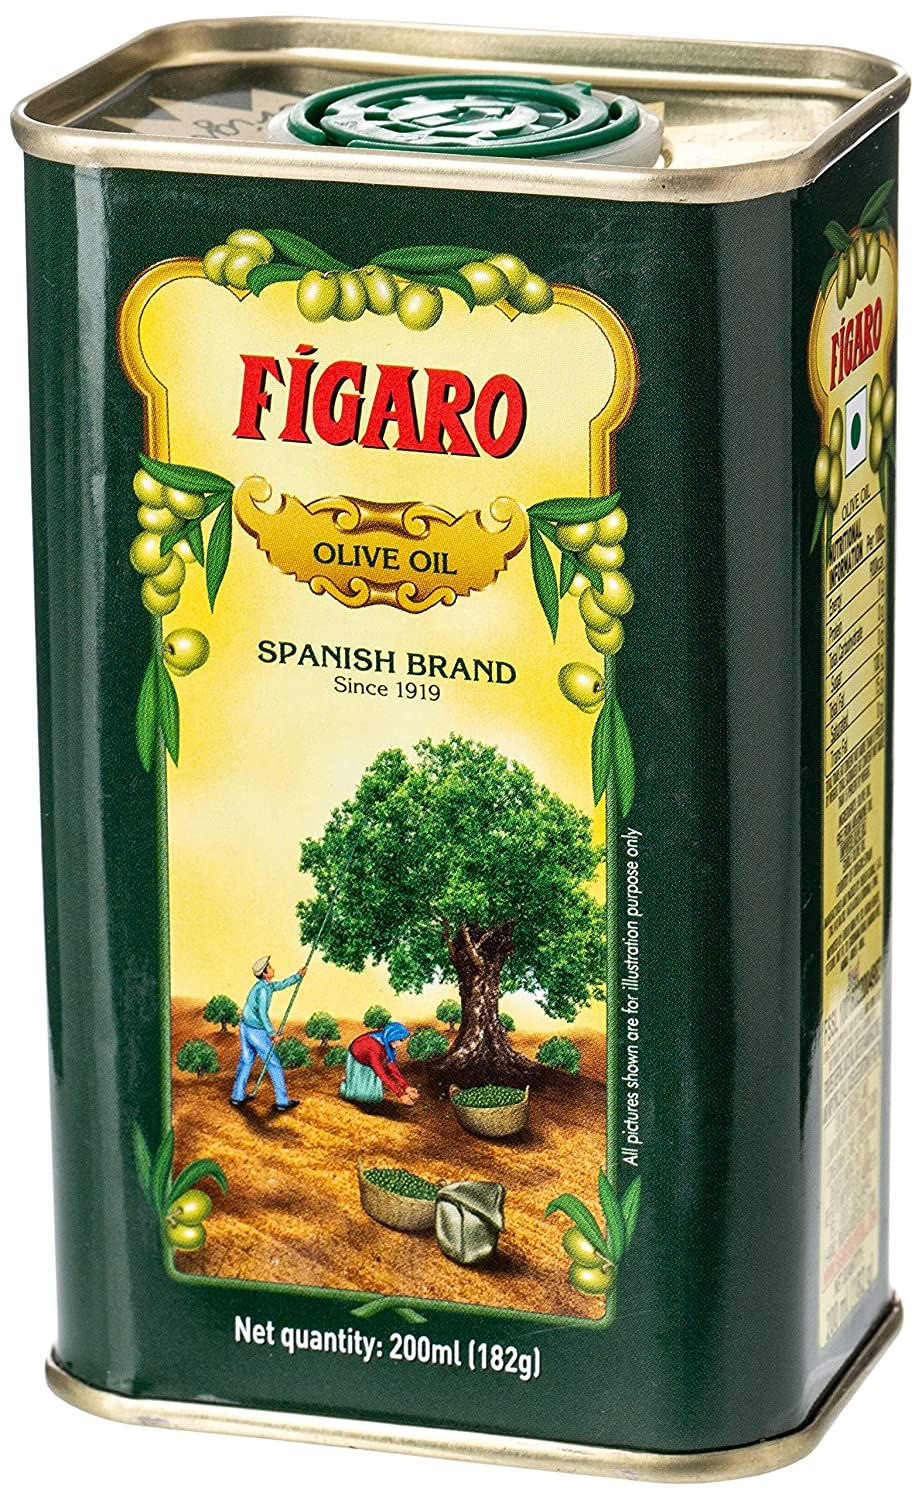 Figaro Olive Oil Image